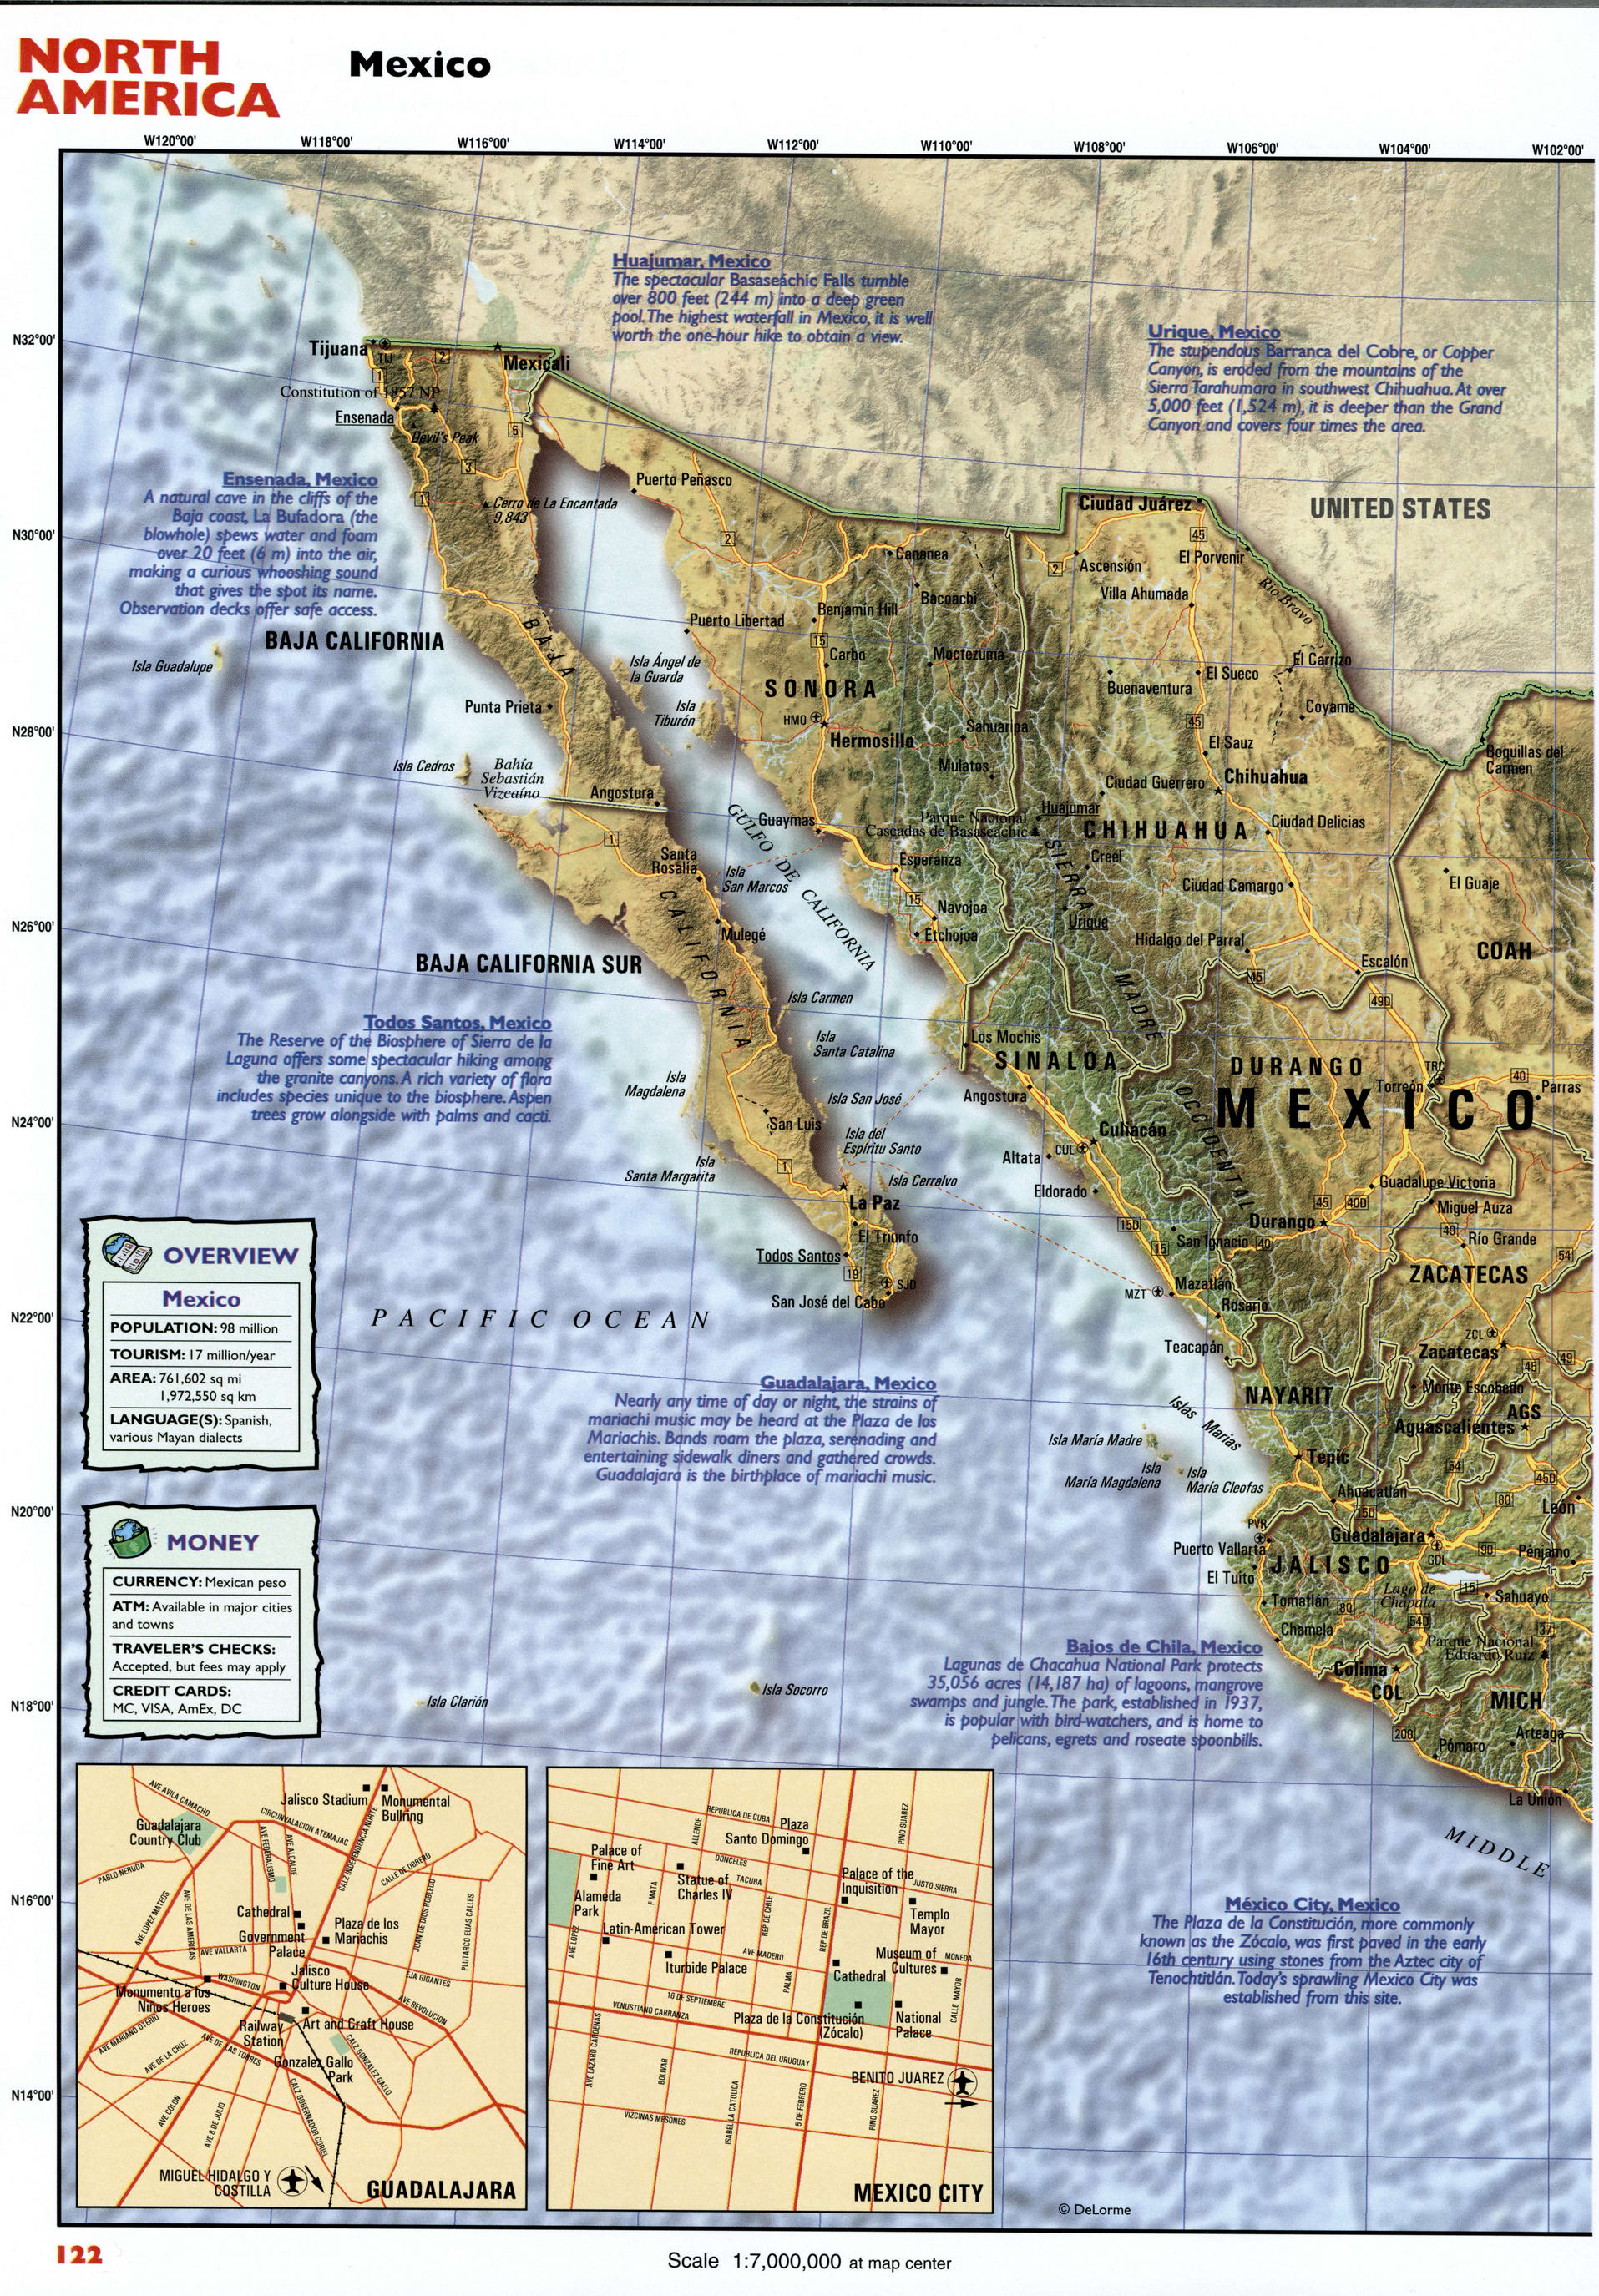 Mexico tourist map